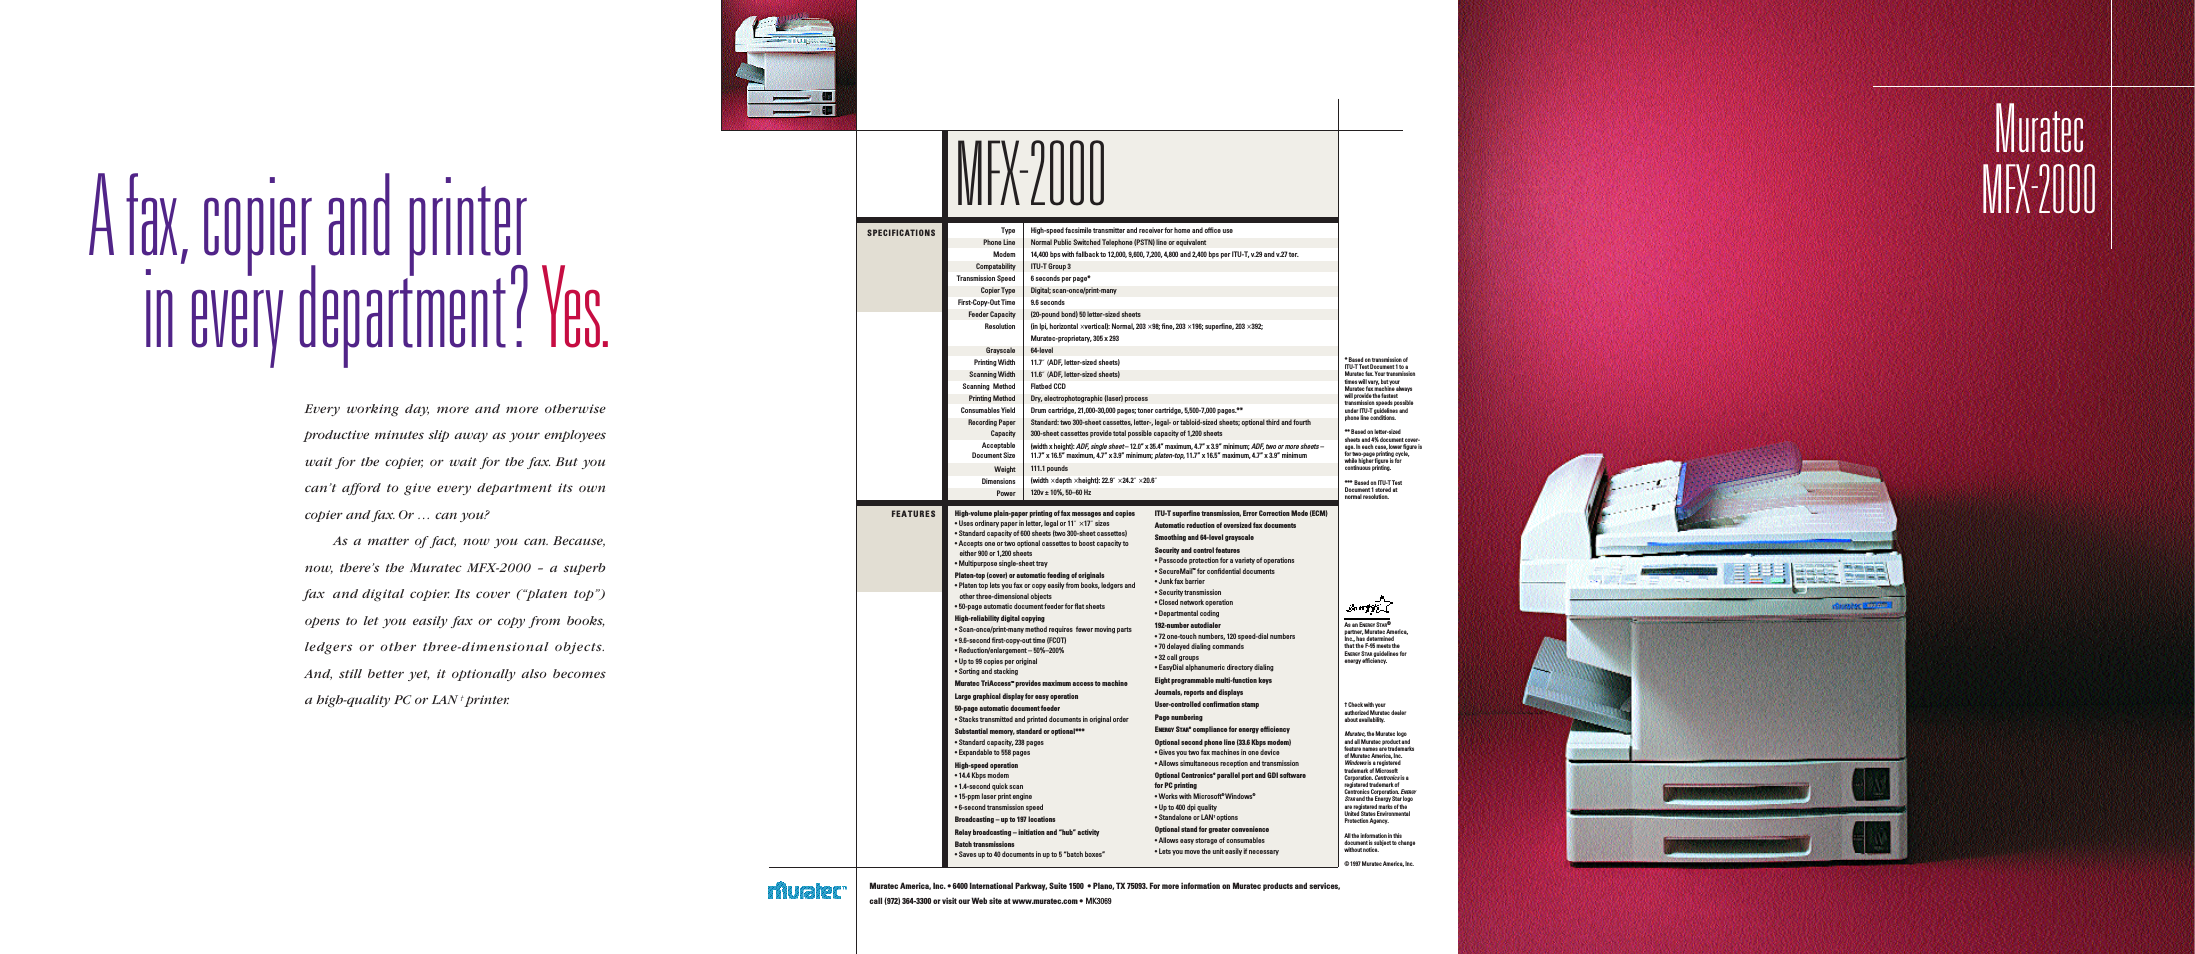 MFX-2000